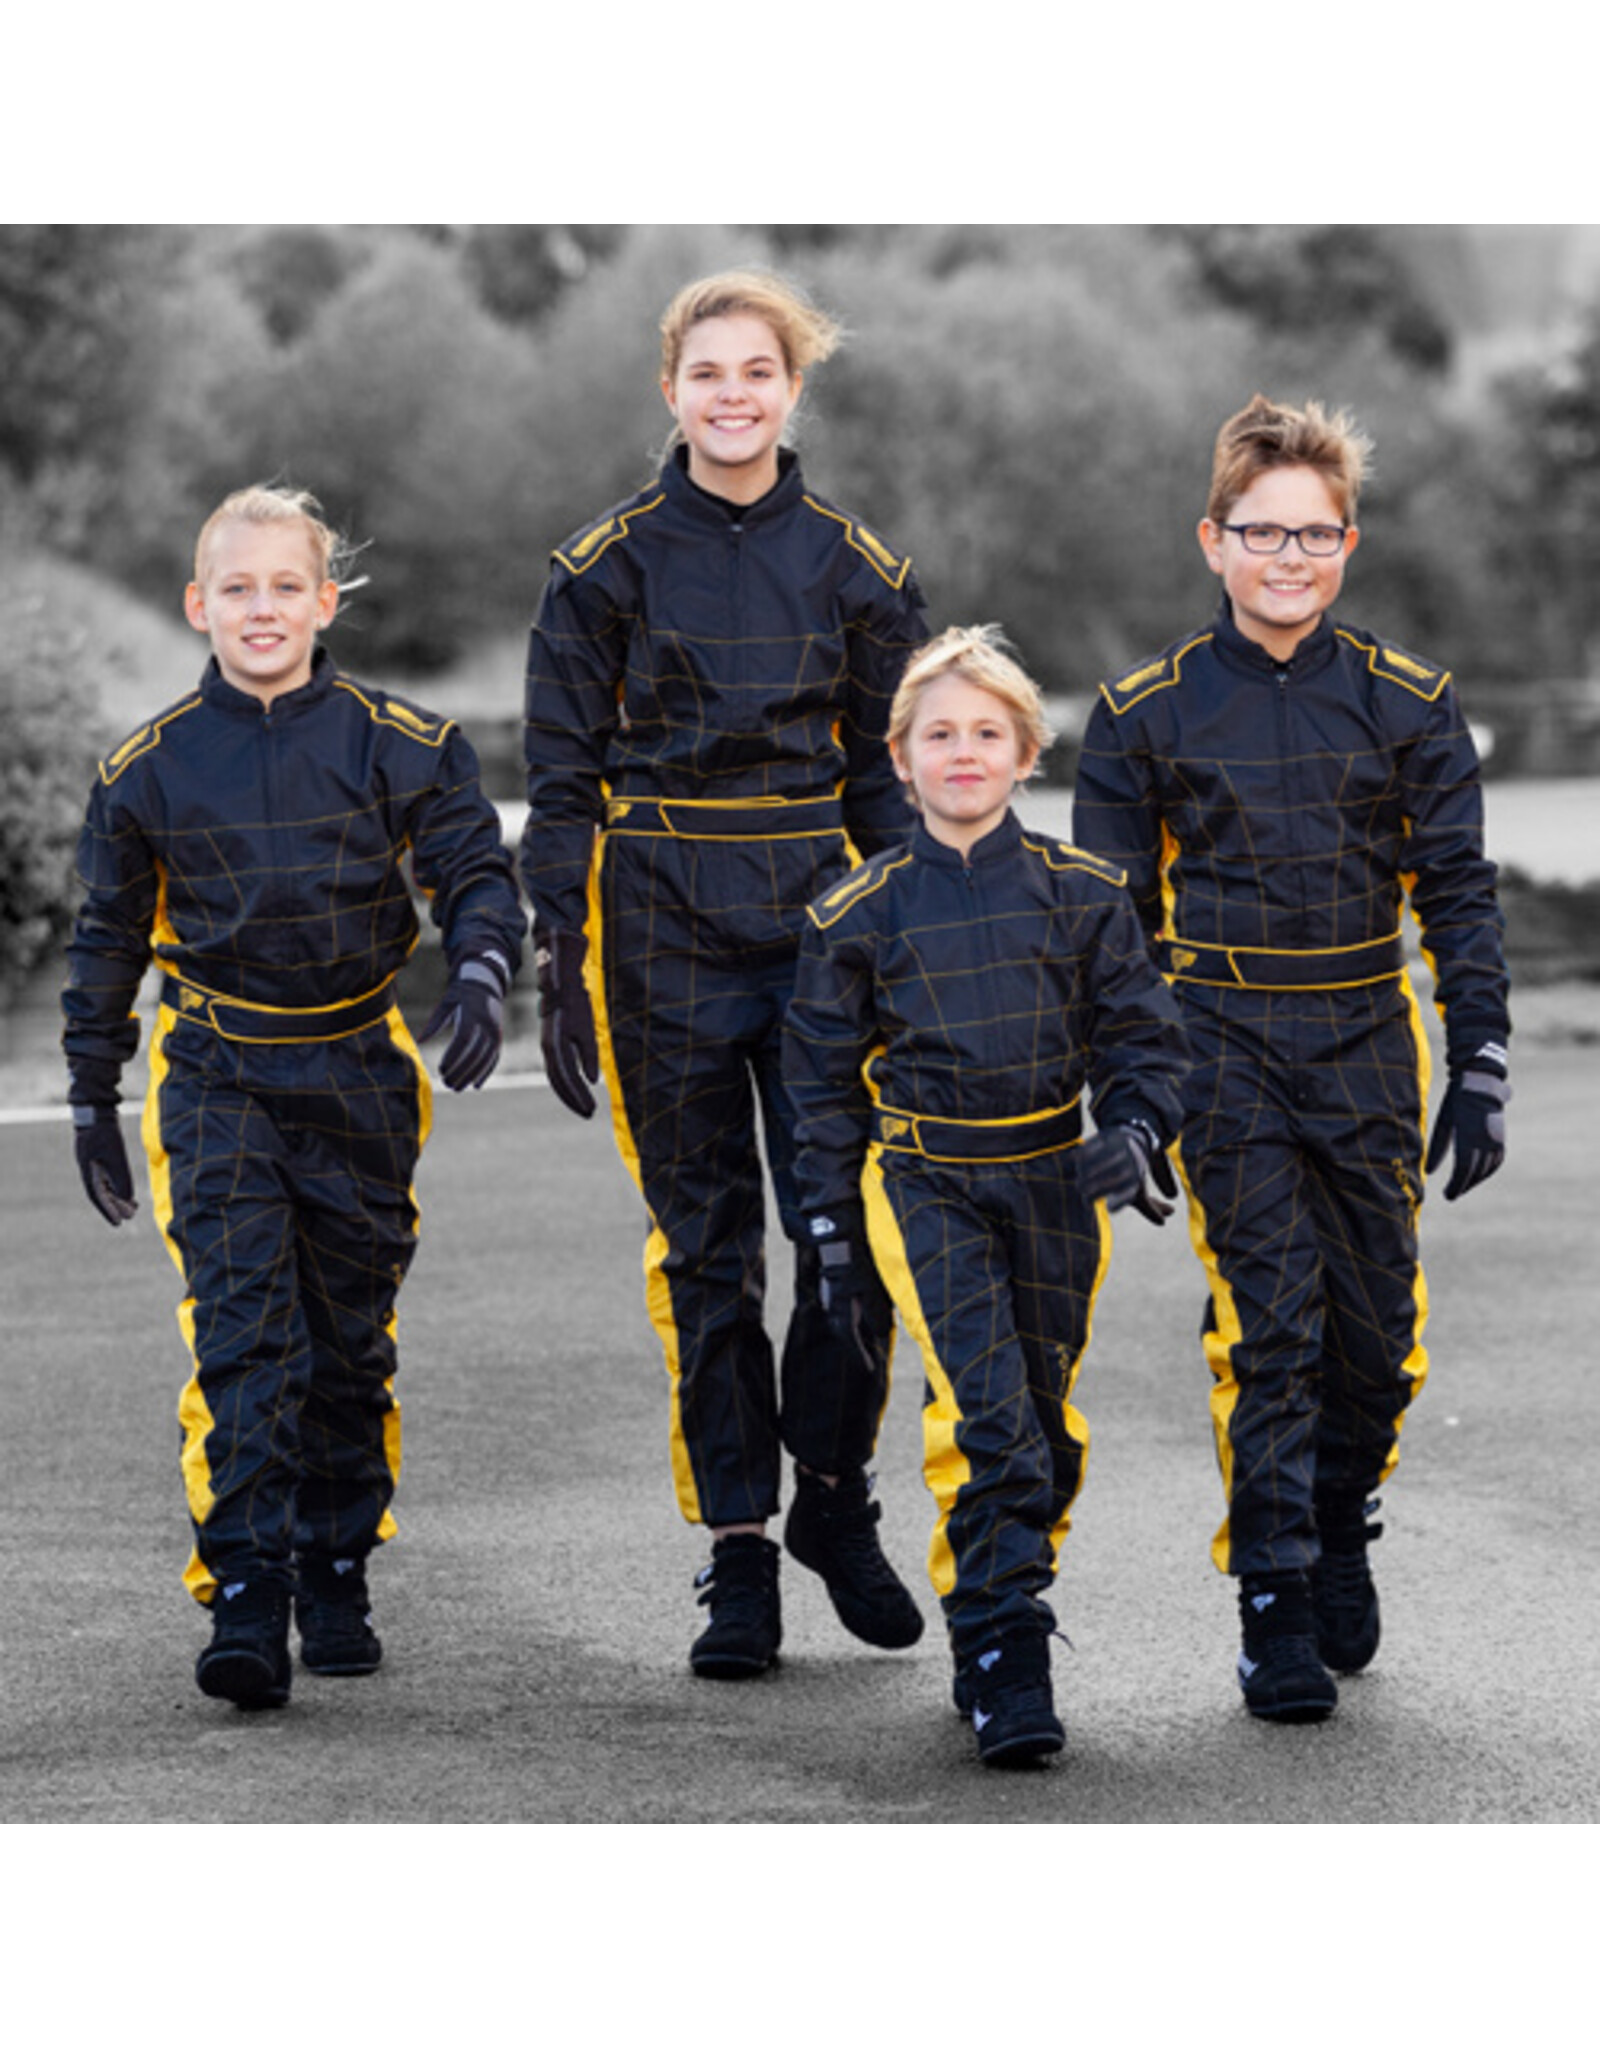 Speed Racewear Speed CS-2 condura hobby suit atlanta black / yellow